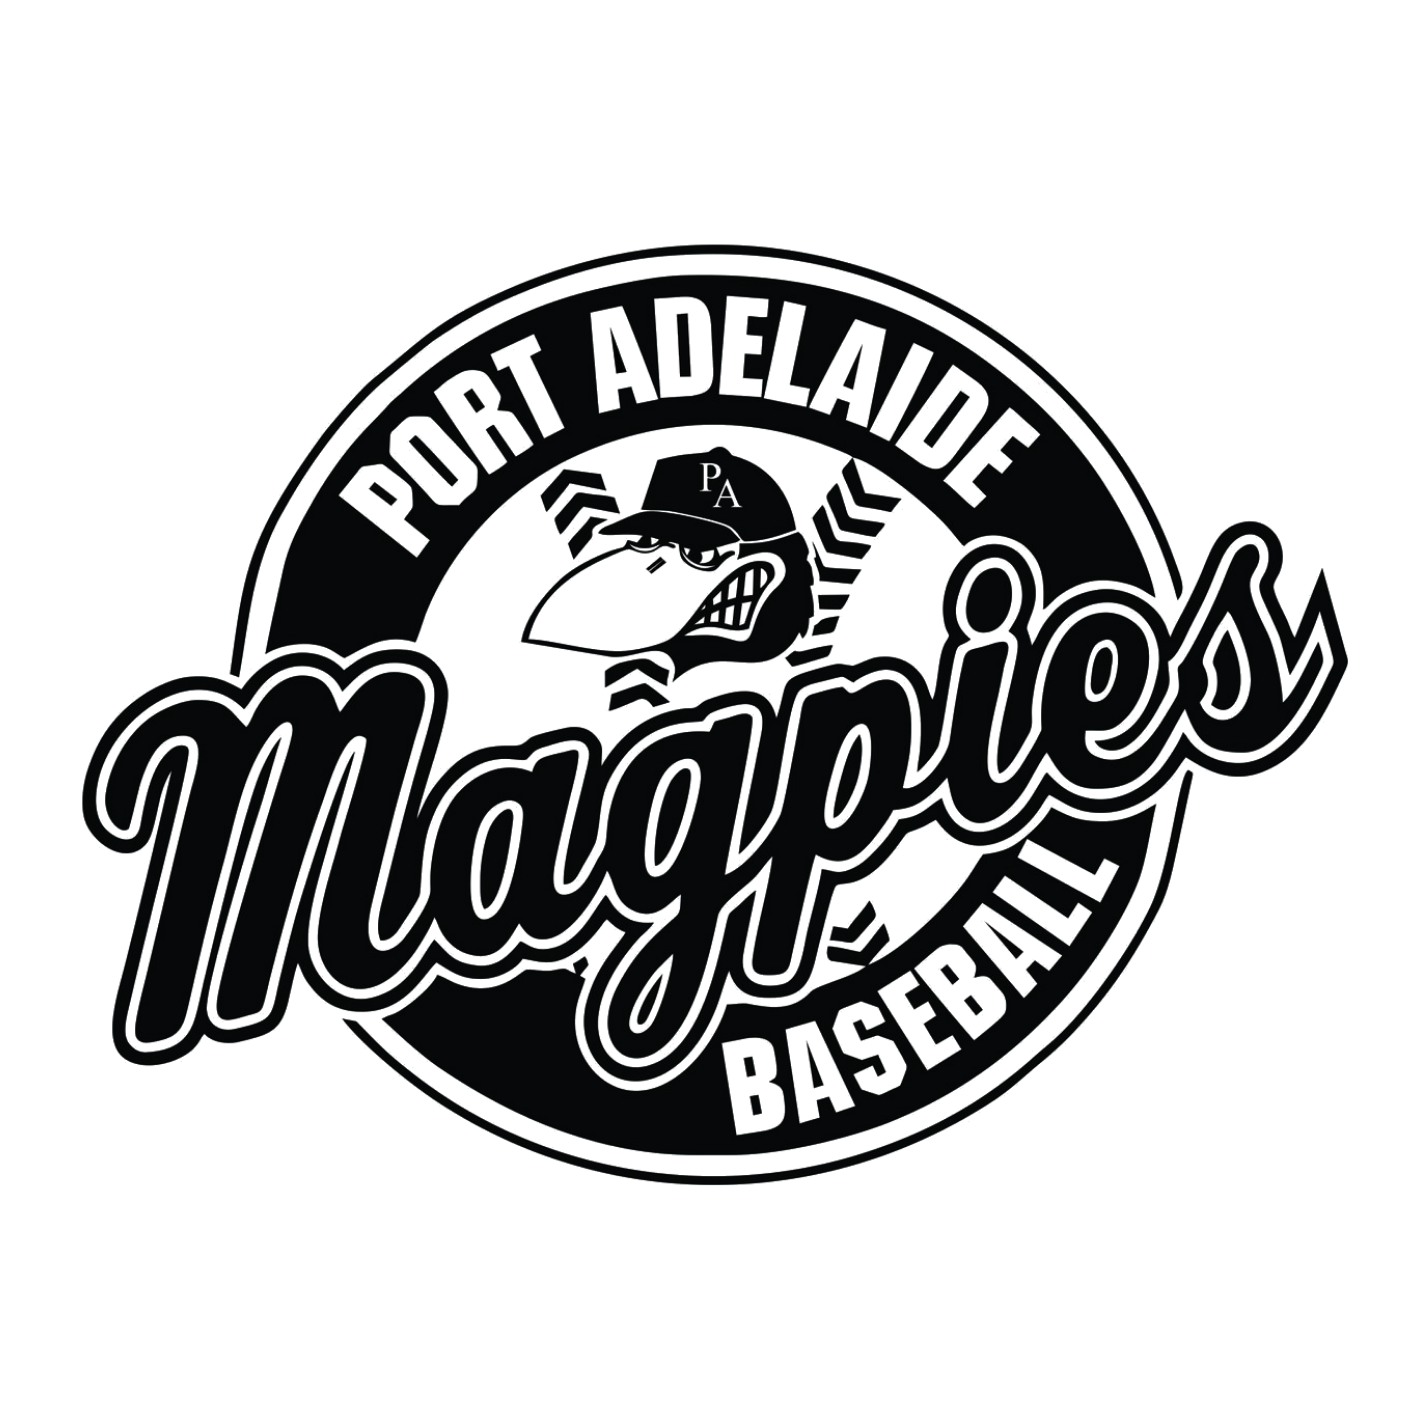 Adelaide Marlins Charter Baseball